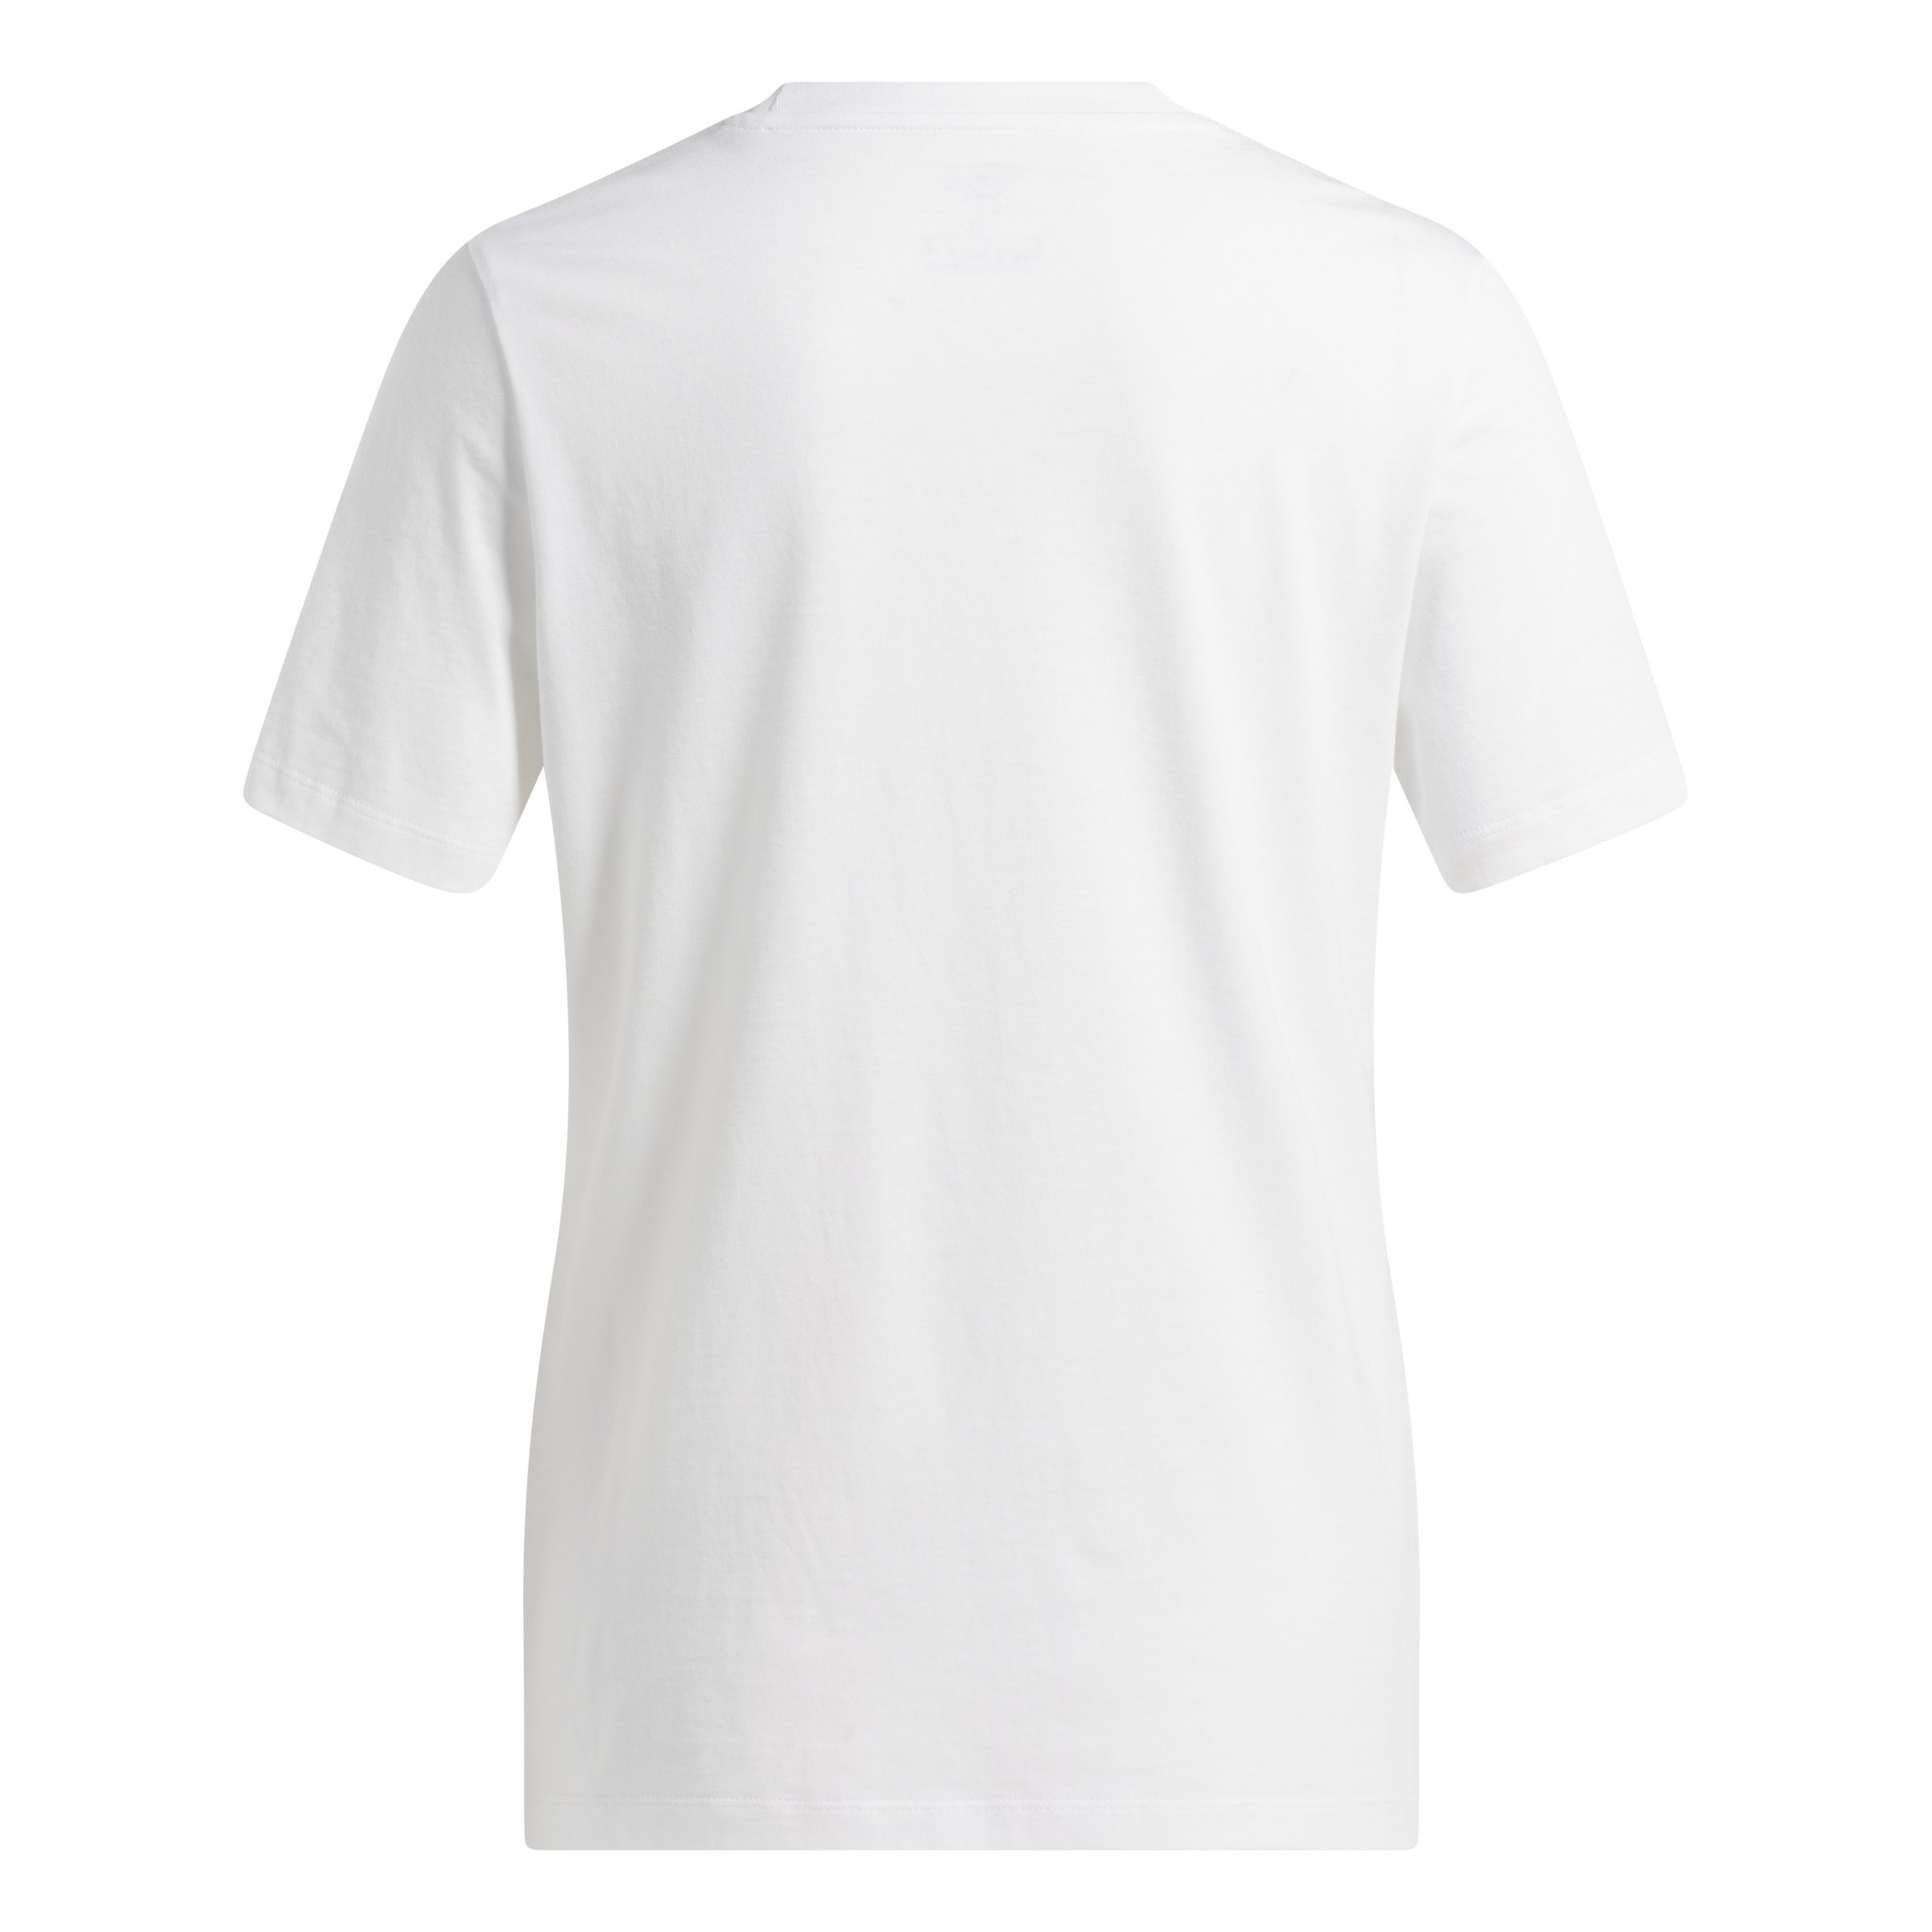 Reebok T-Shirt RI BL white Tee